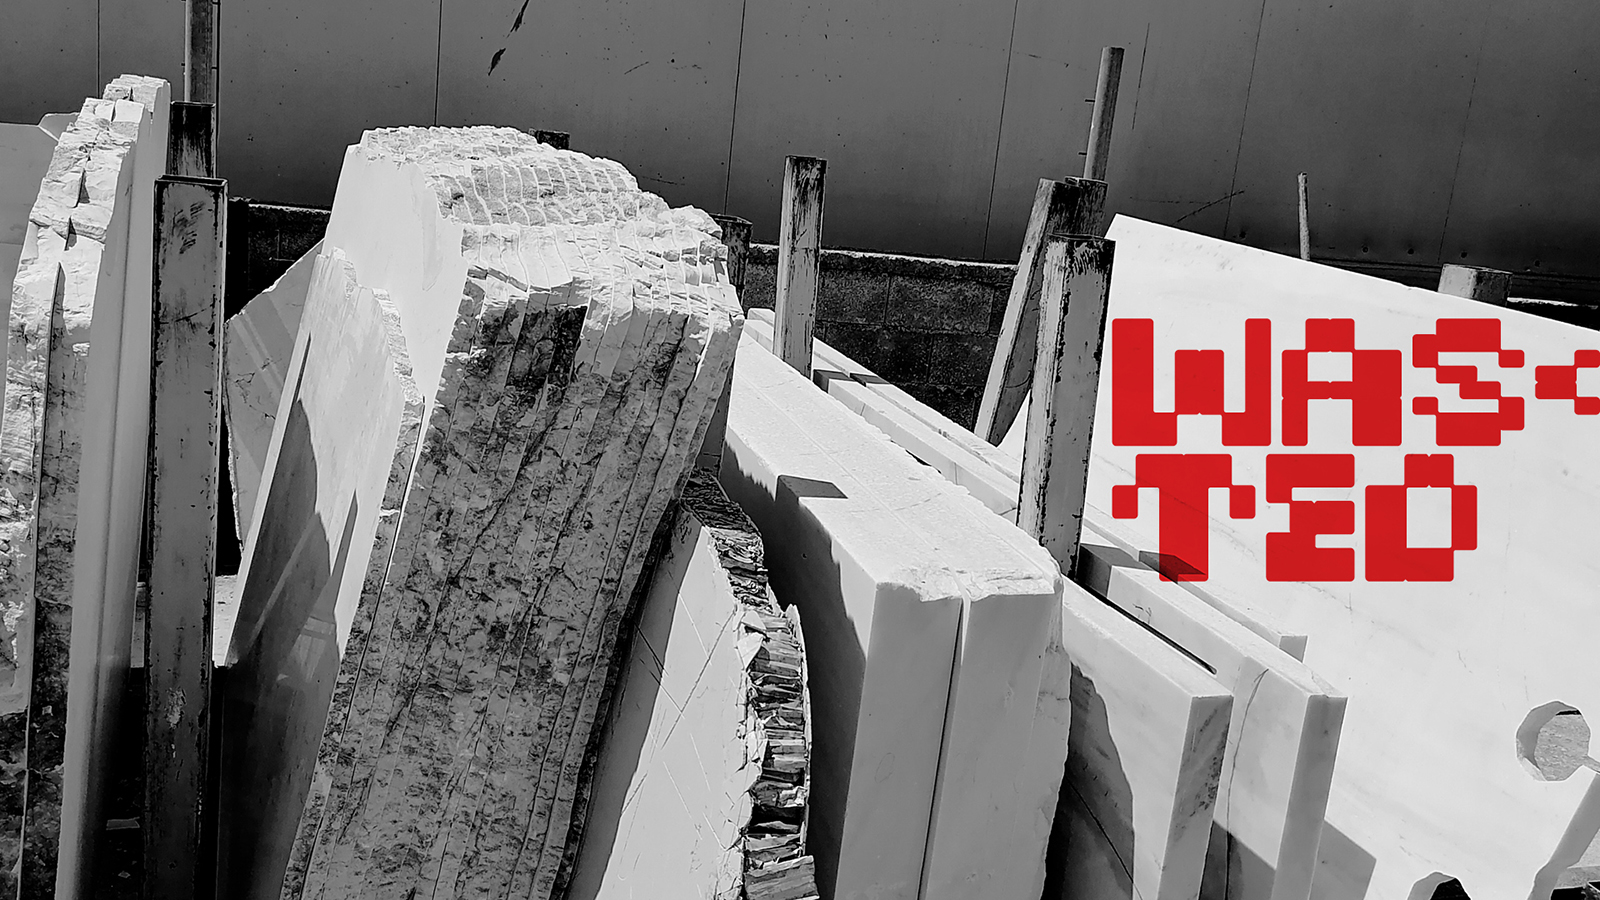 Archisearch Waste not Want not” | Mία παραγωγή της Design Ambassador σε επιμέλεια των John Veikos  Άννα Σμπώκου, στο πλαίσιο του “The Architect Show” 2022